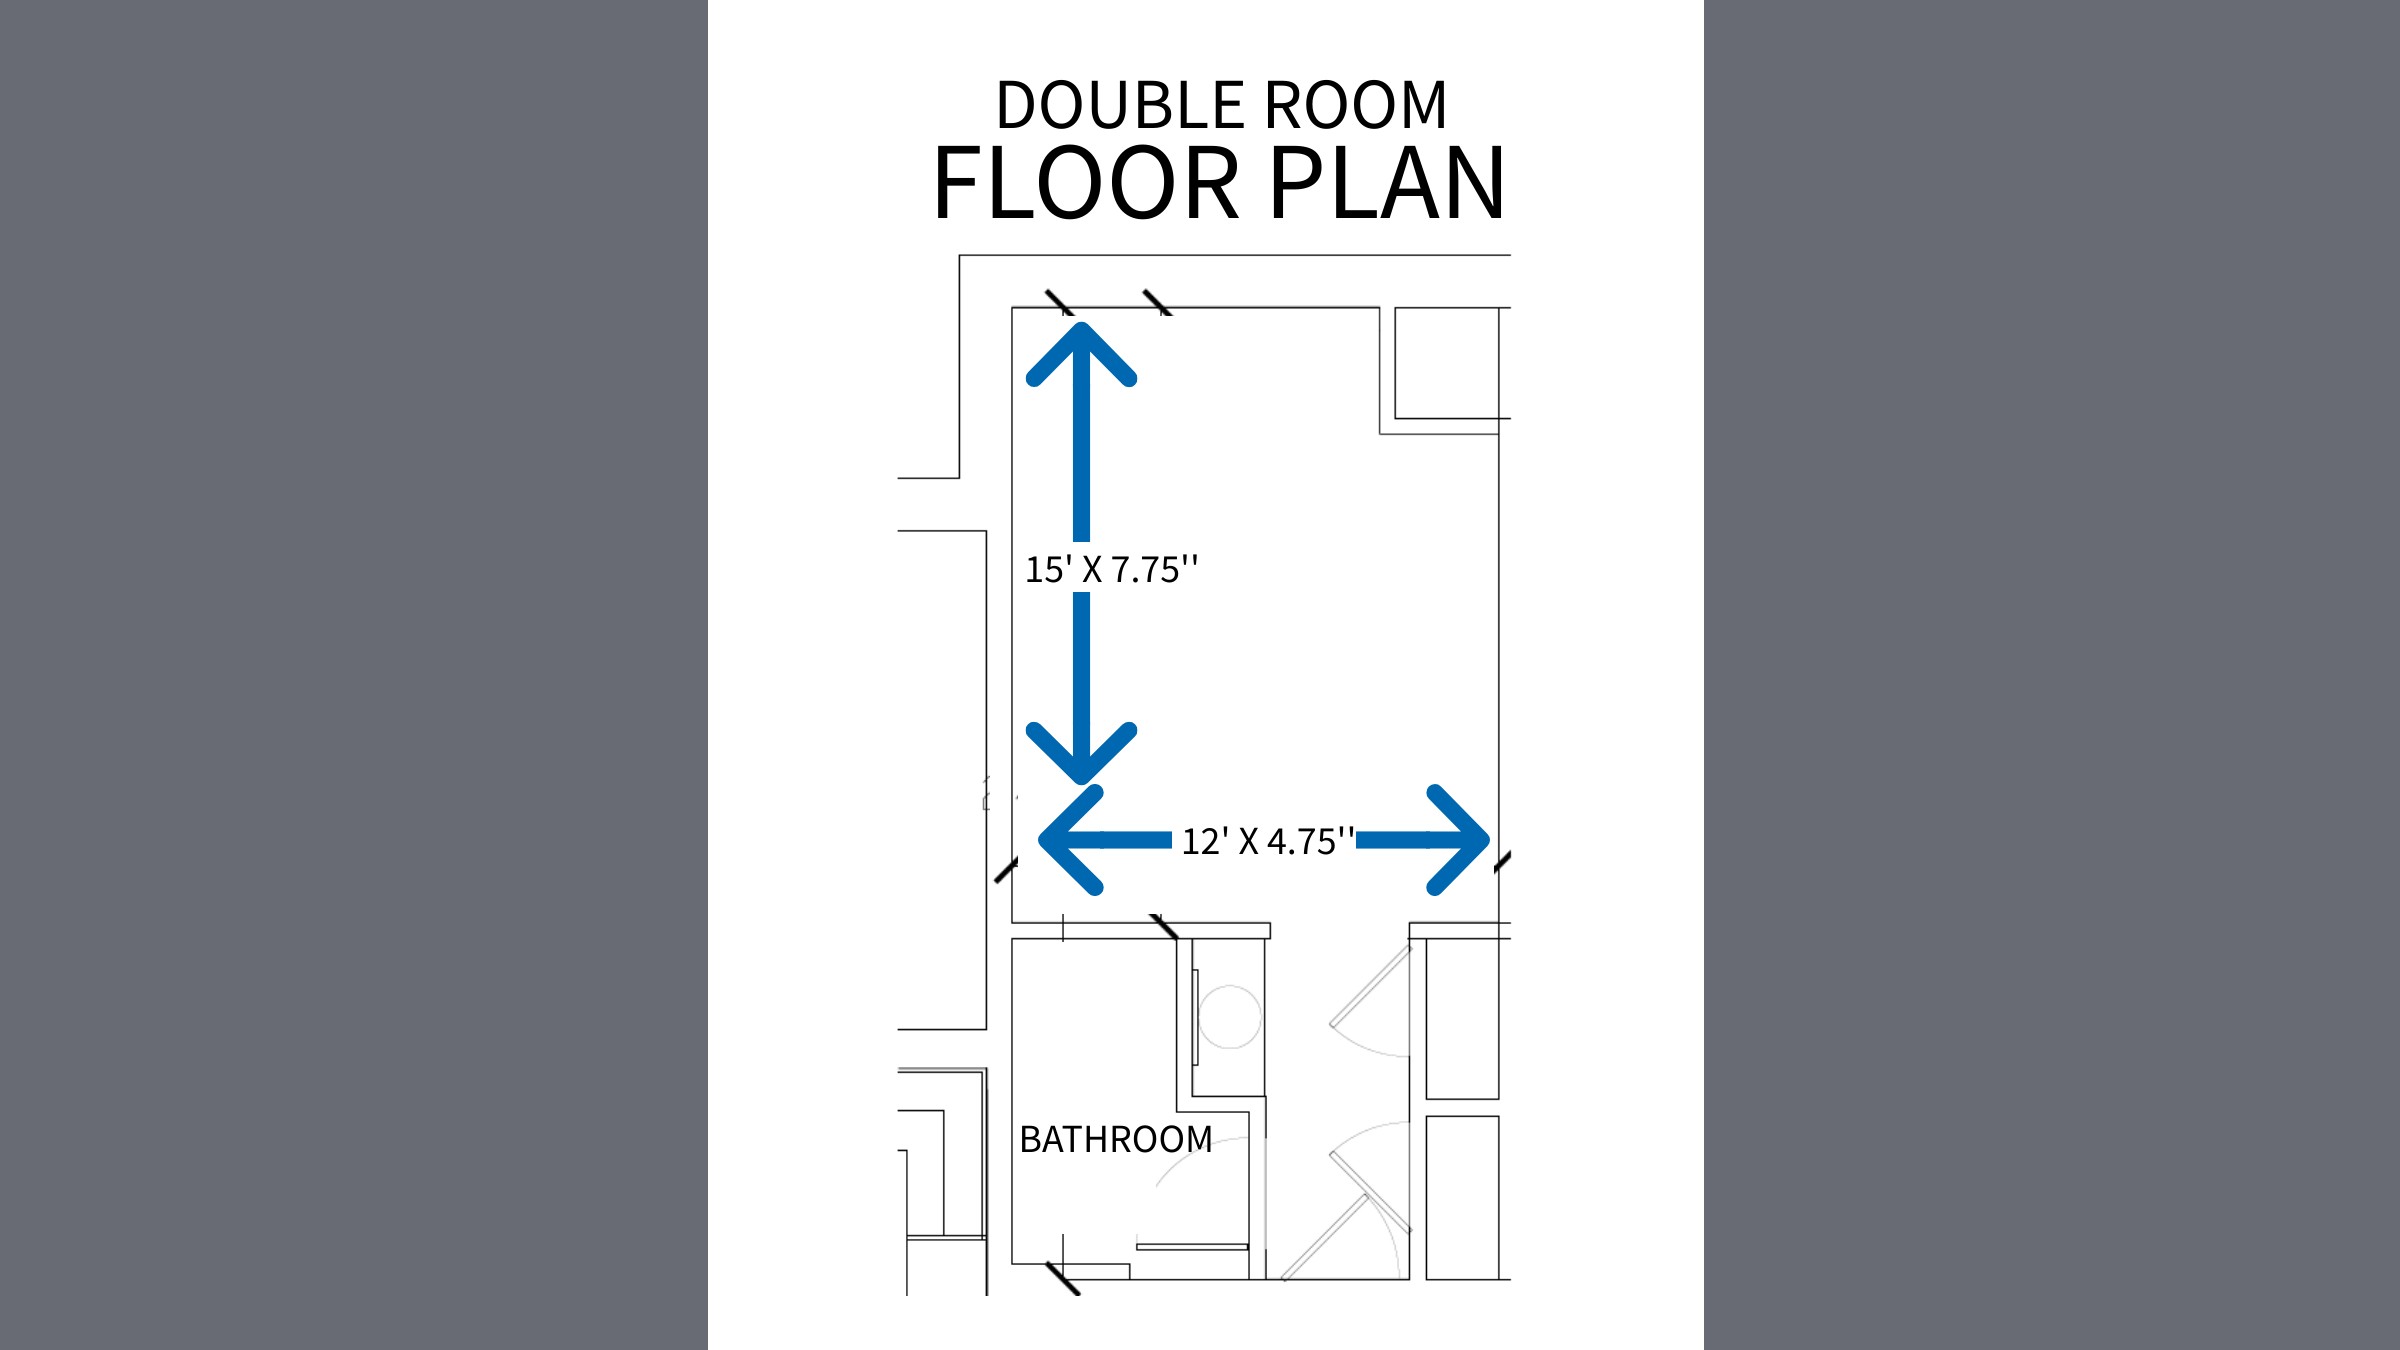 Renaissance Floorplan - Double Room